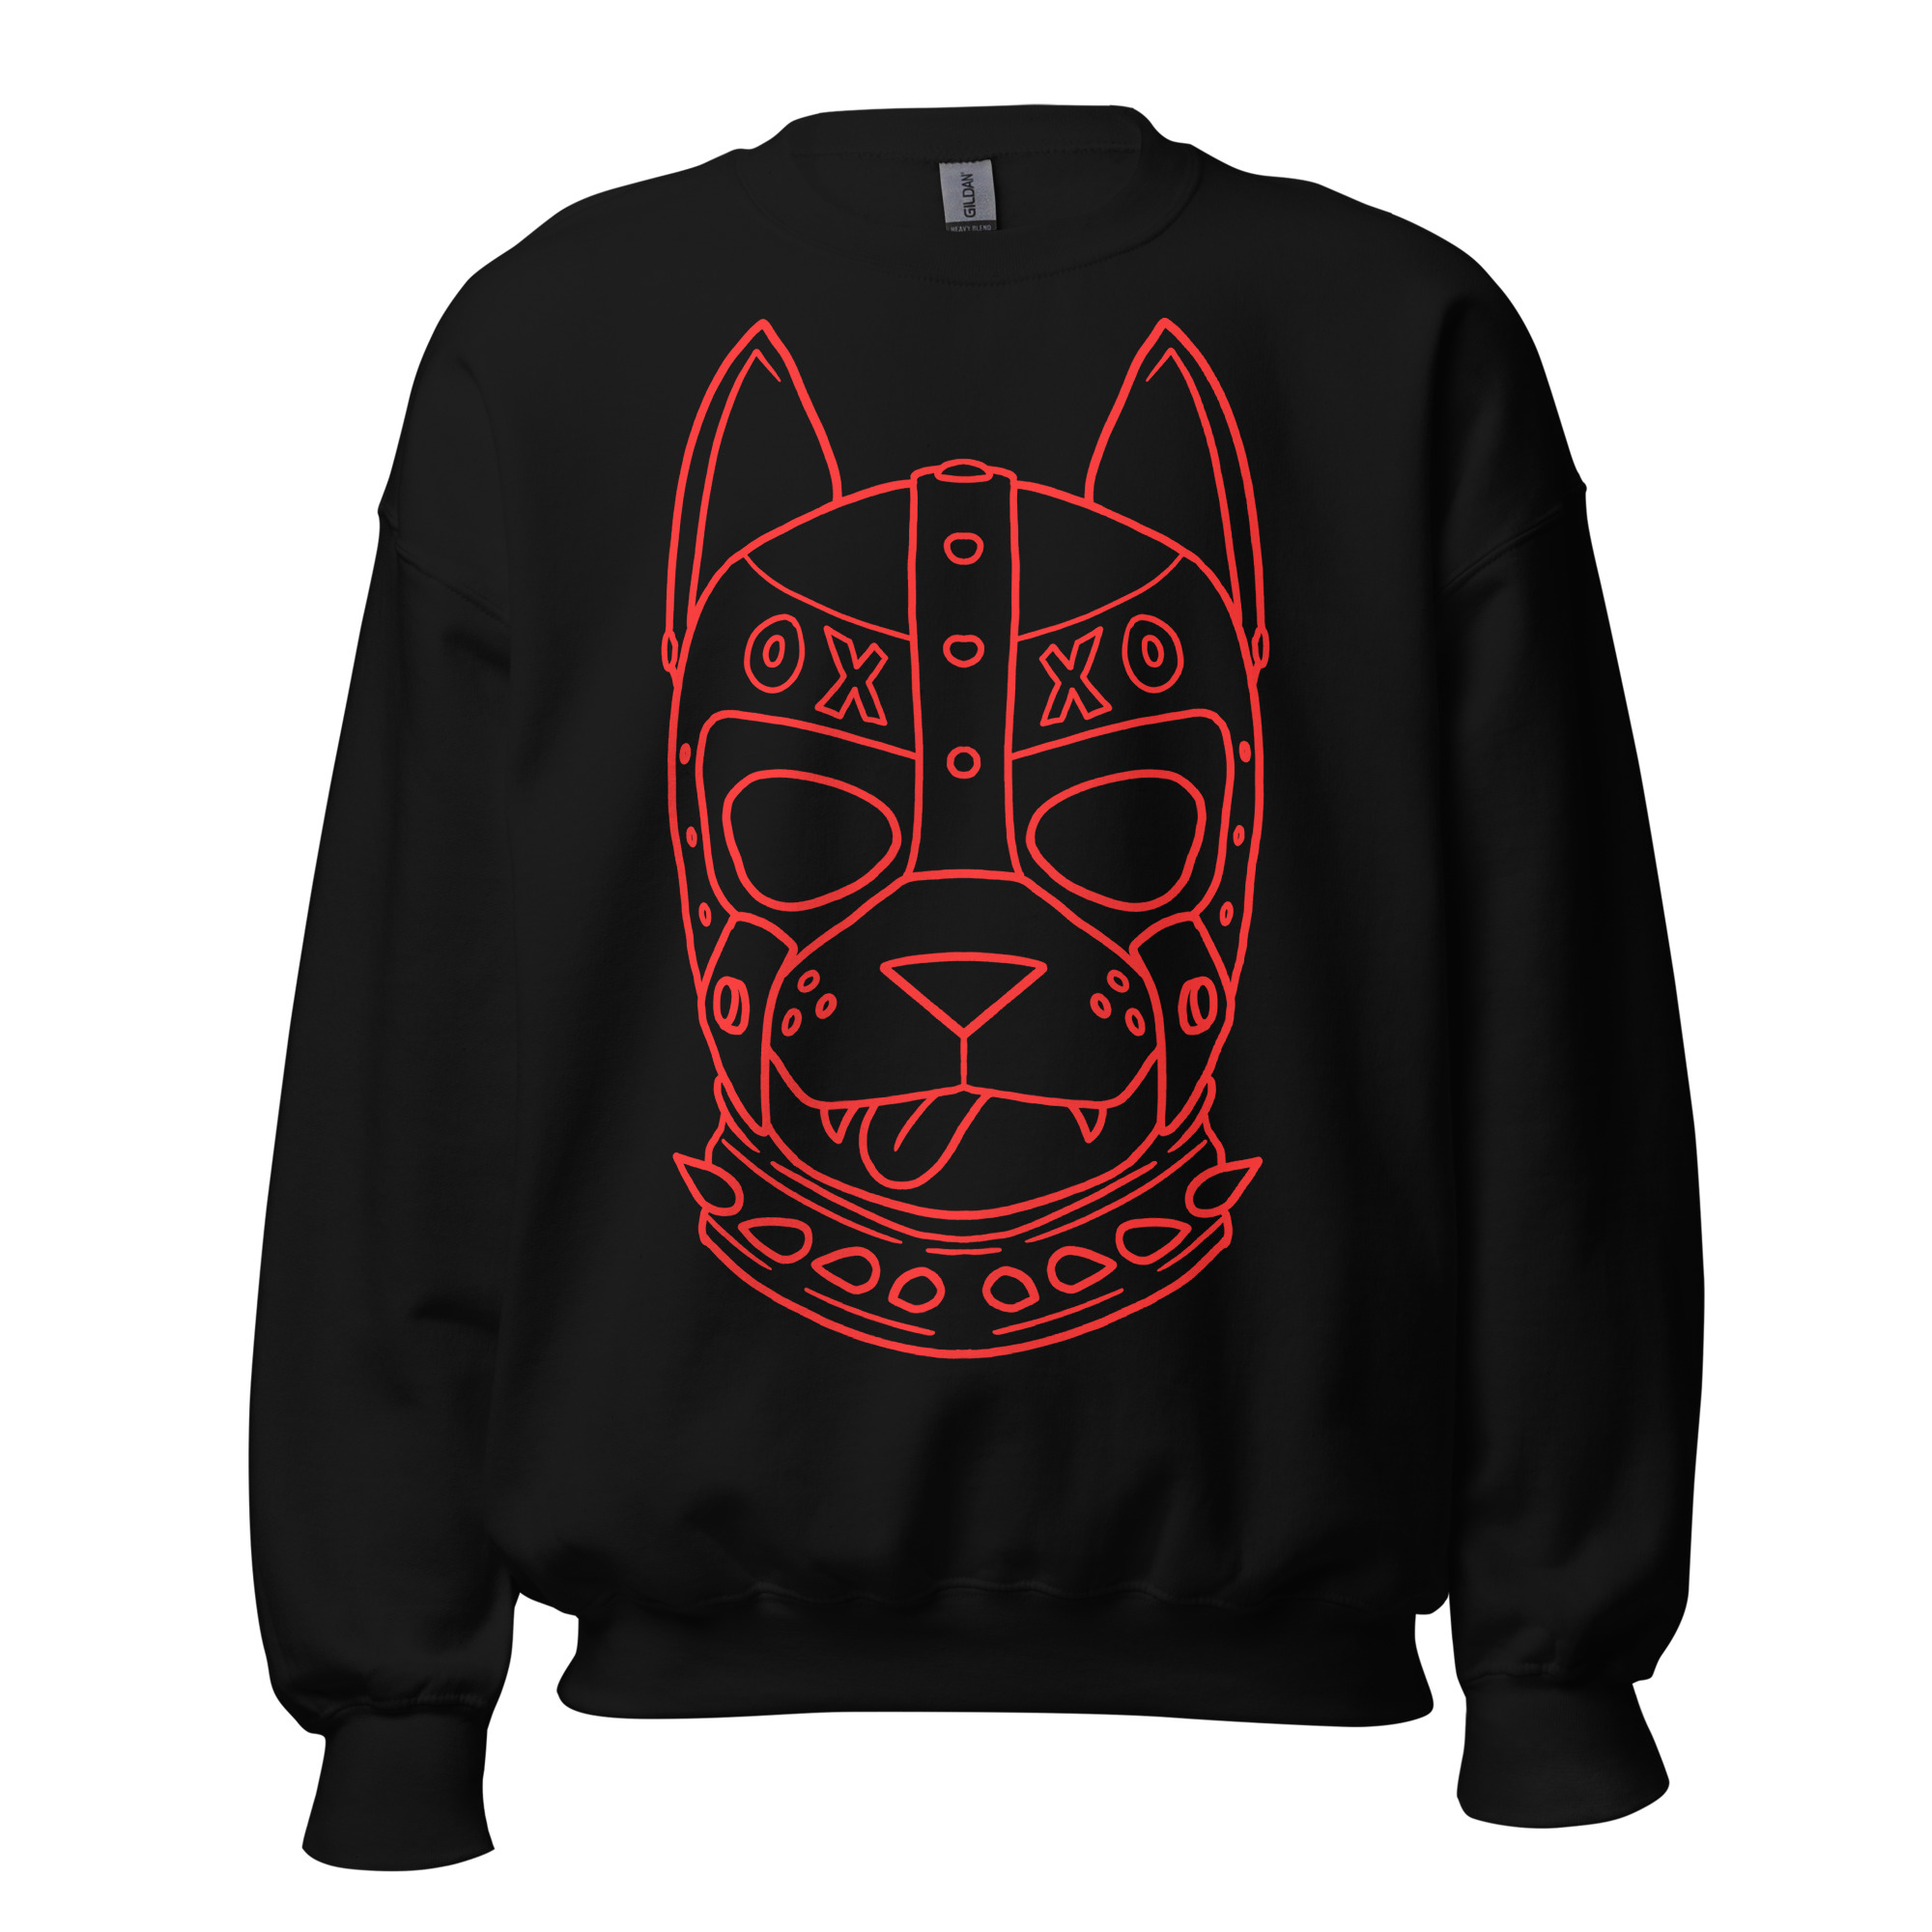 Featured image for “Red Pup Mask - Unisex Gildan Sweatshirt”